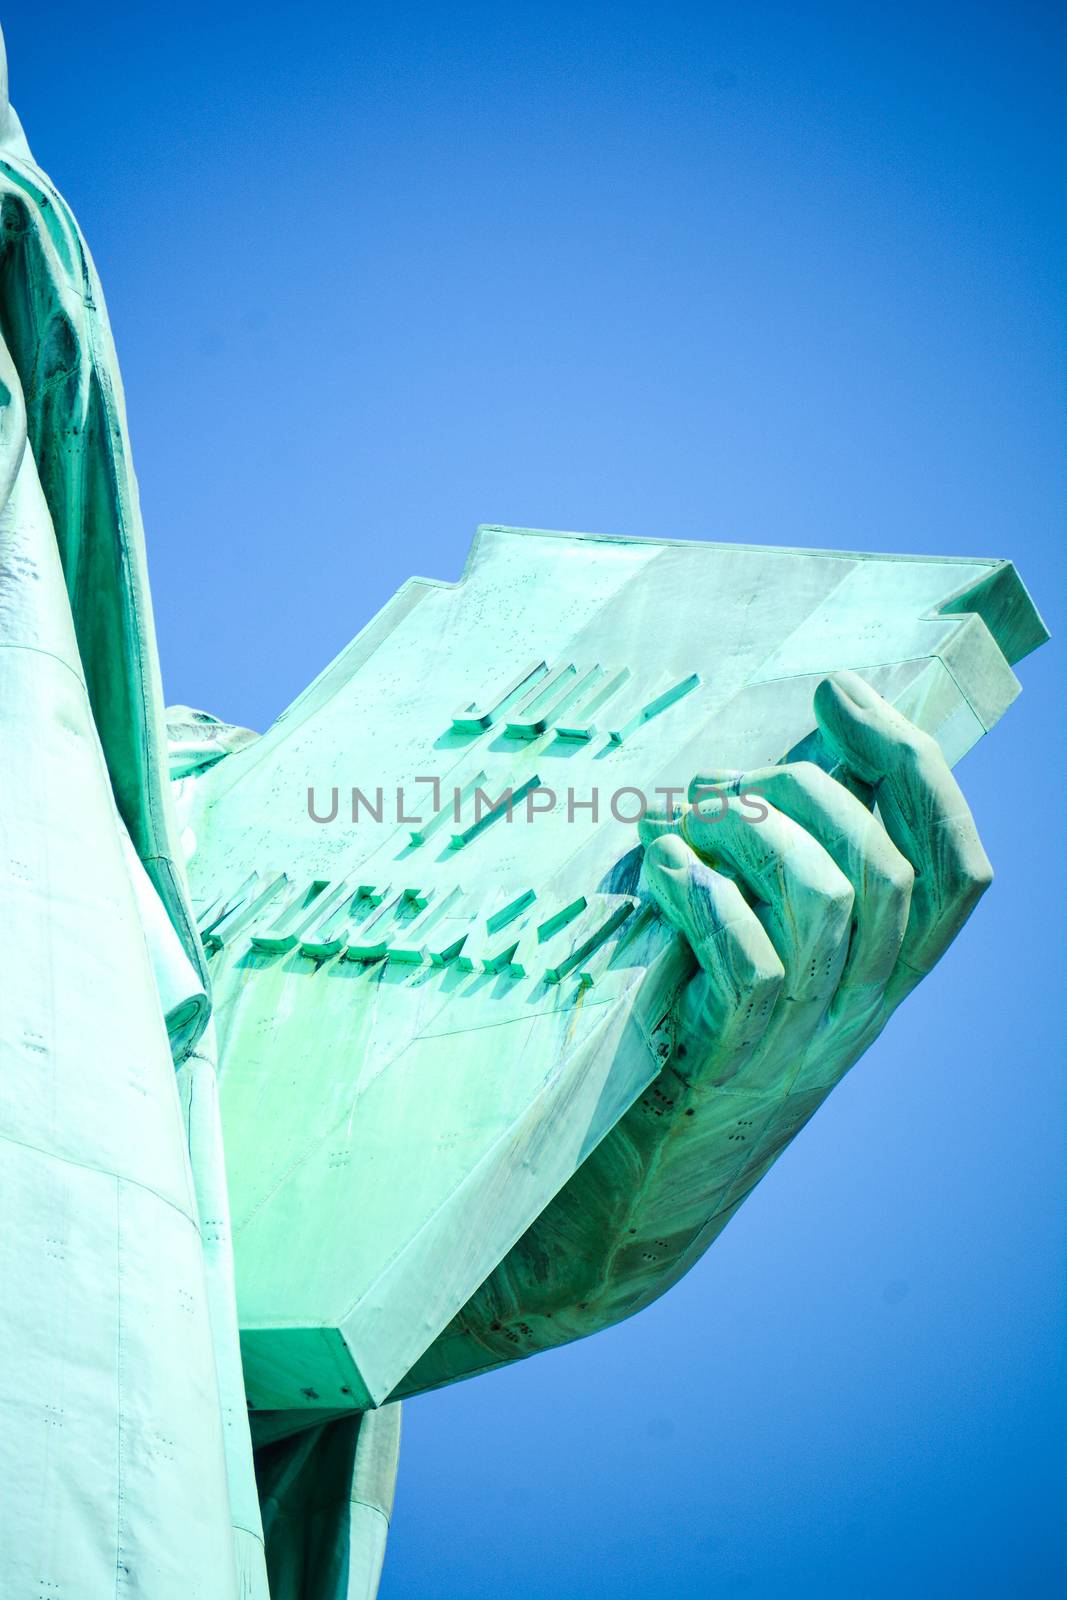 Lady Liberty original views of statue